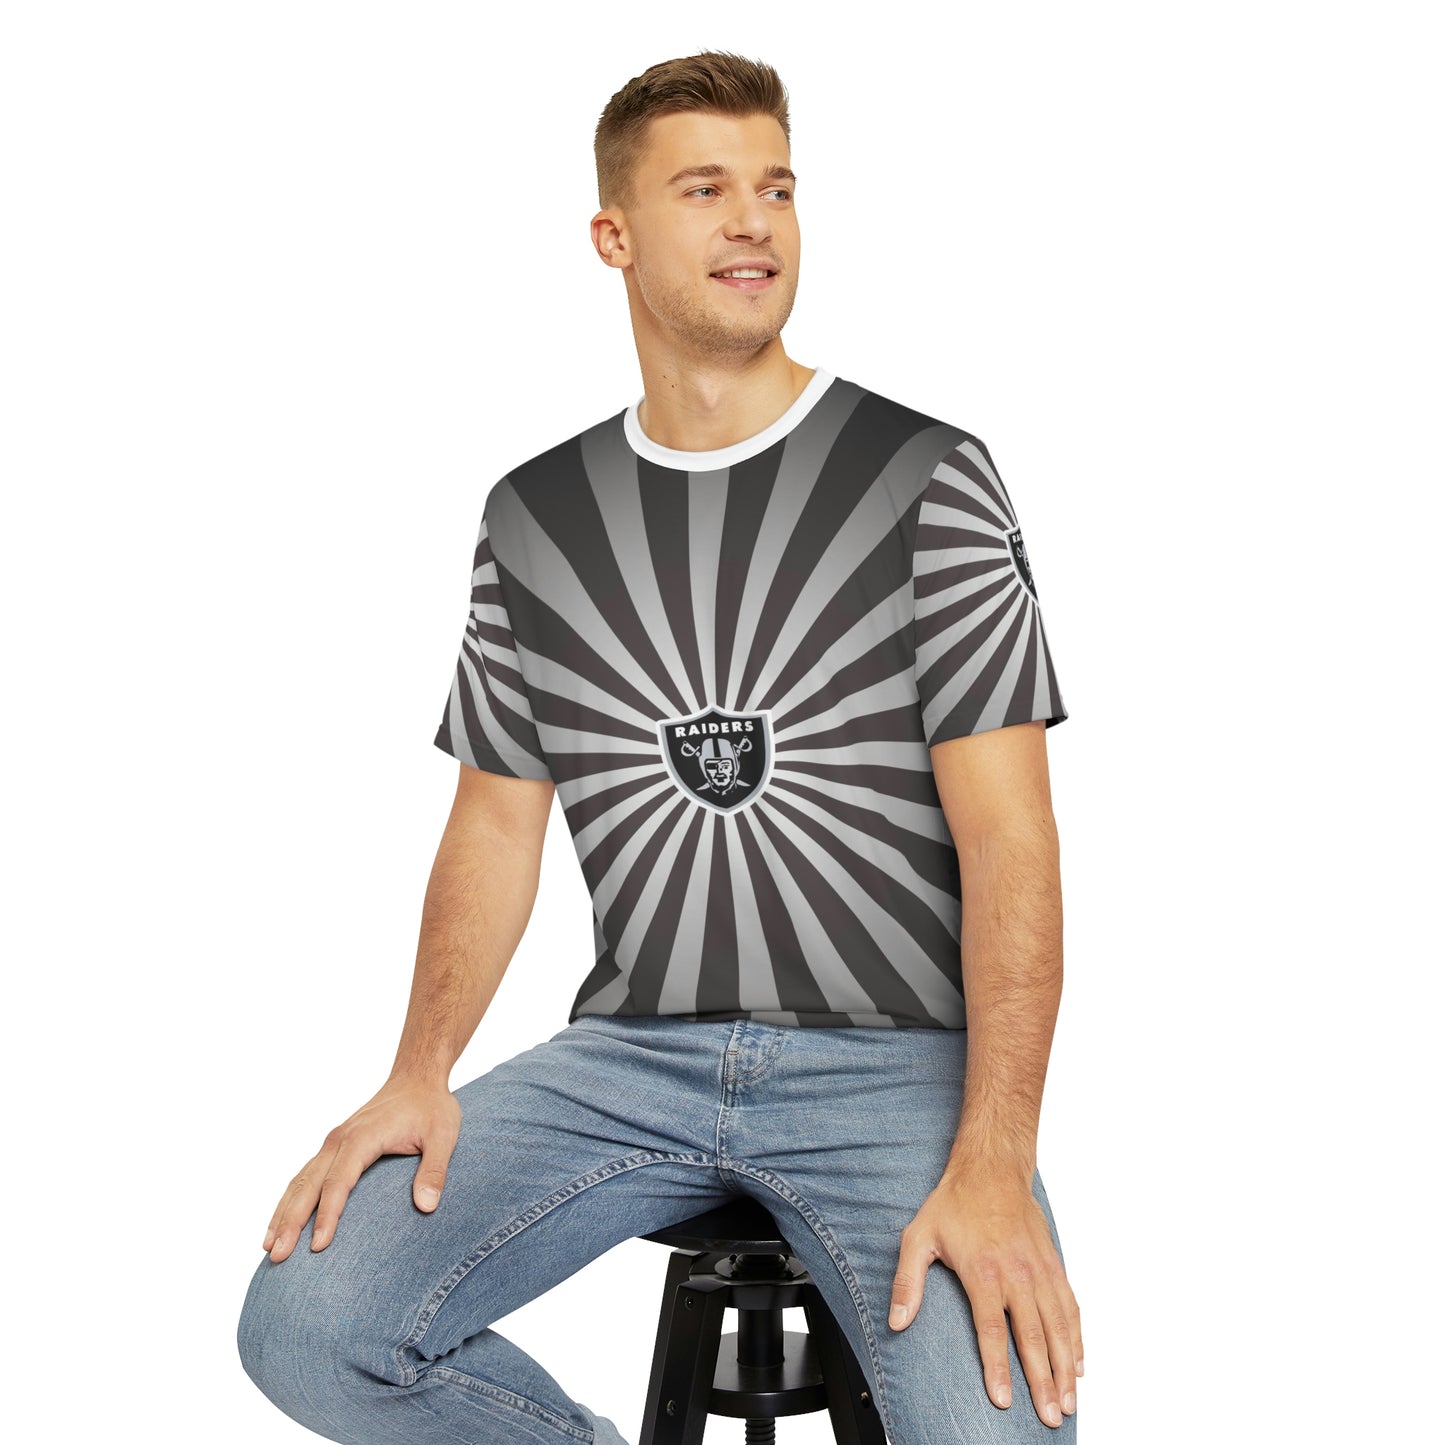 Geotrott NFL Las Vegas Raiders Men's Polyester All Over Print Tee T-Shirt